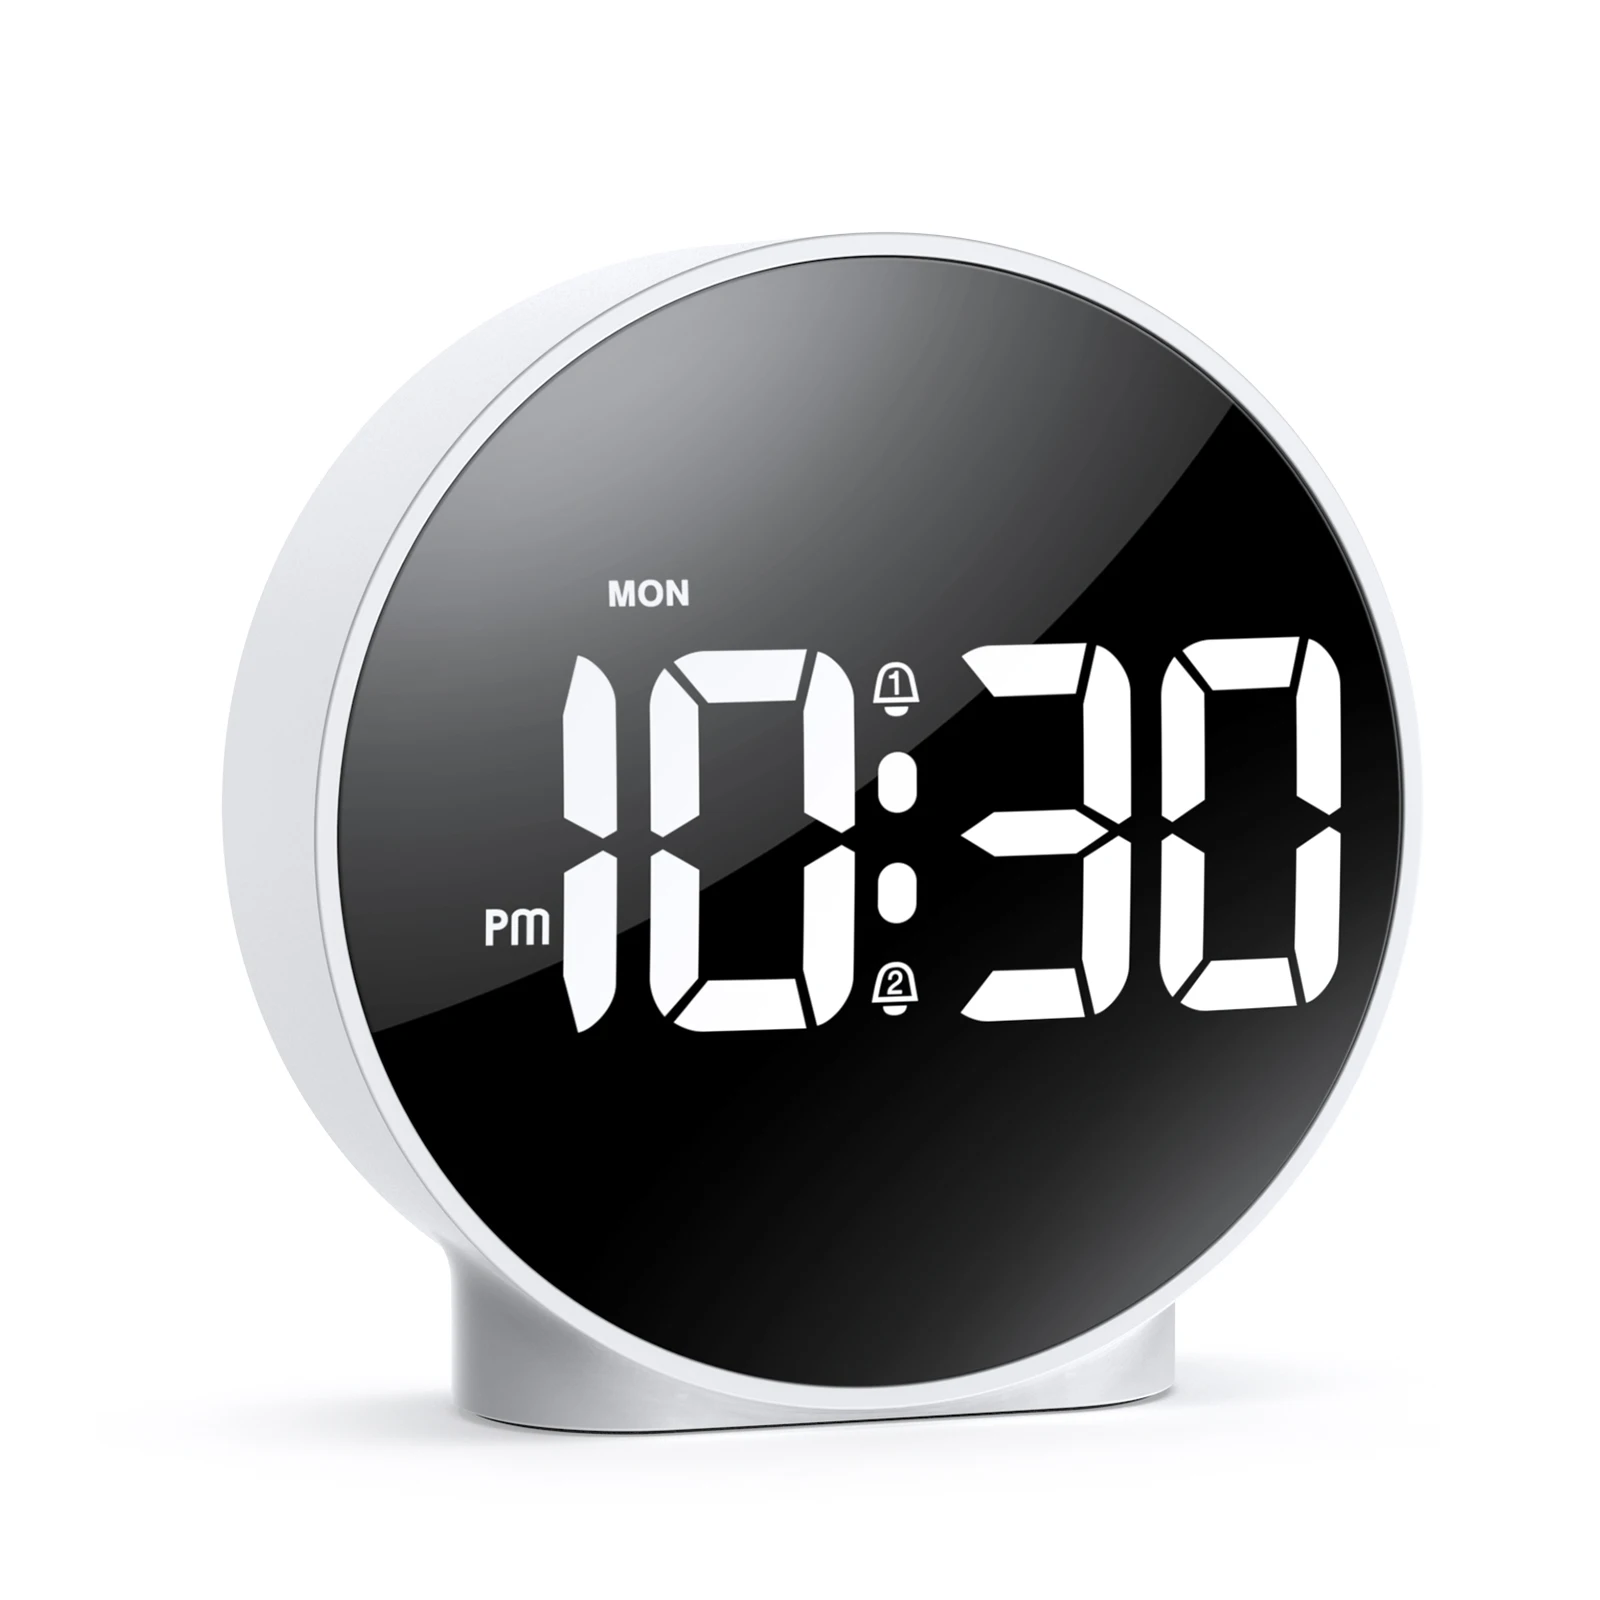 ORIA Digital Alarm LED Table Clock Snooze Display Time Night